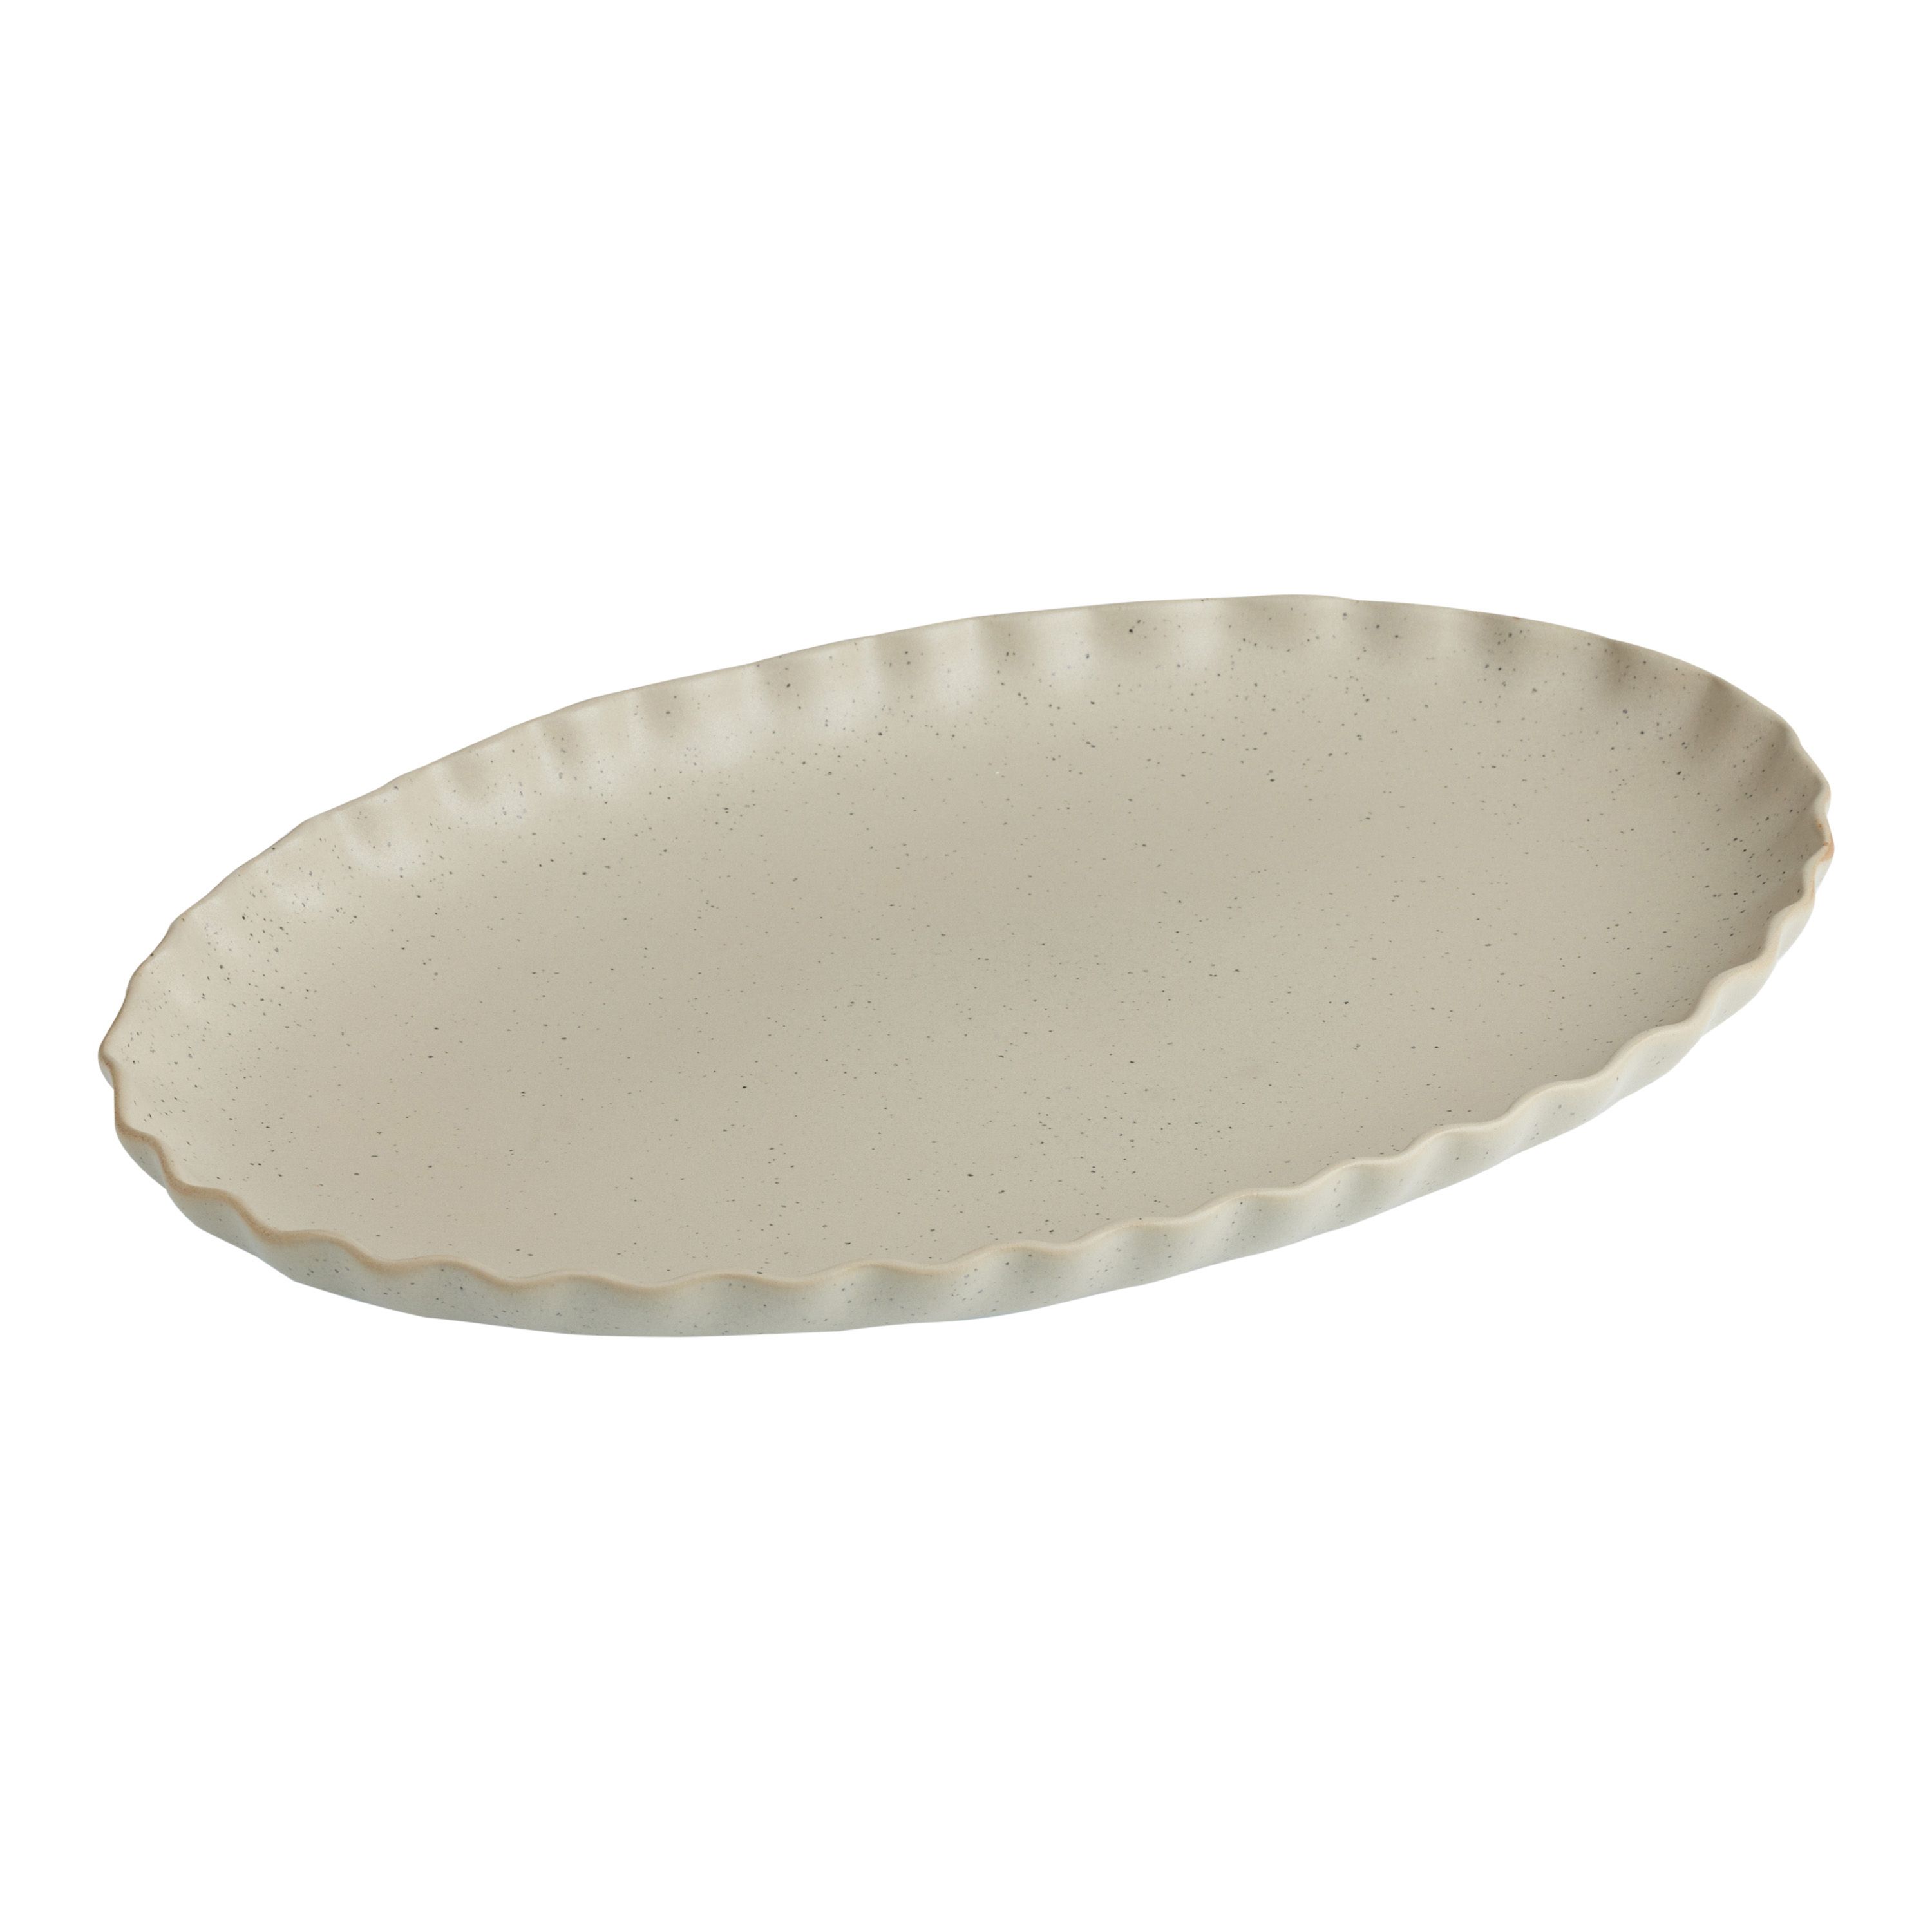 Silva Dove Gray Reactive Glaze Ruffle Rim Serving Platter | World Market